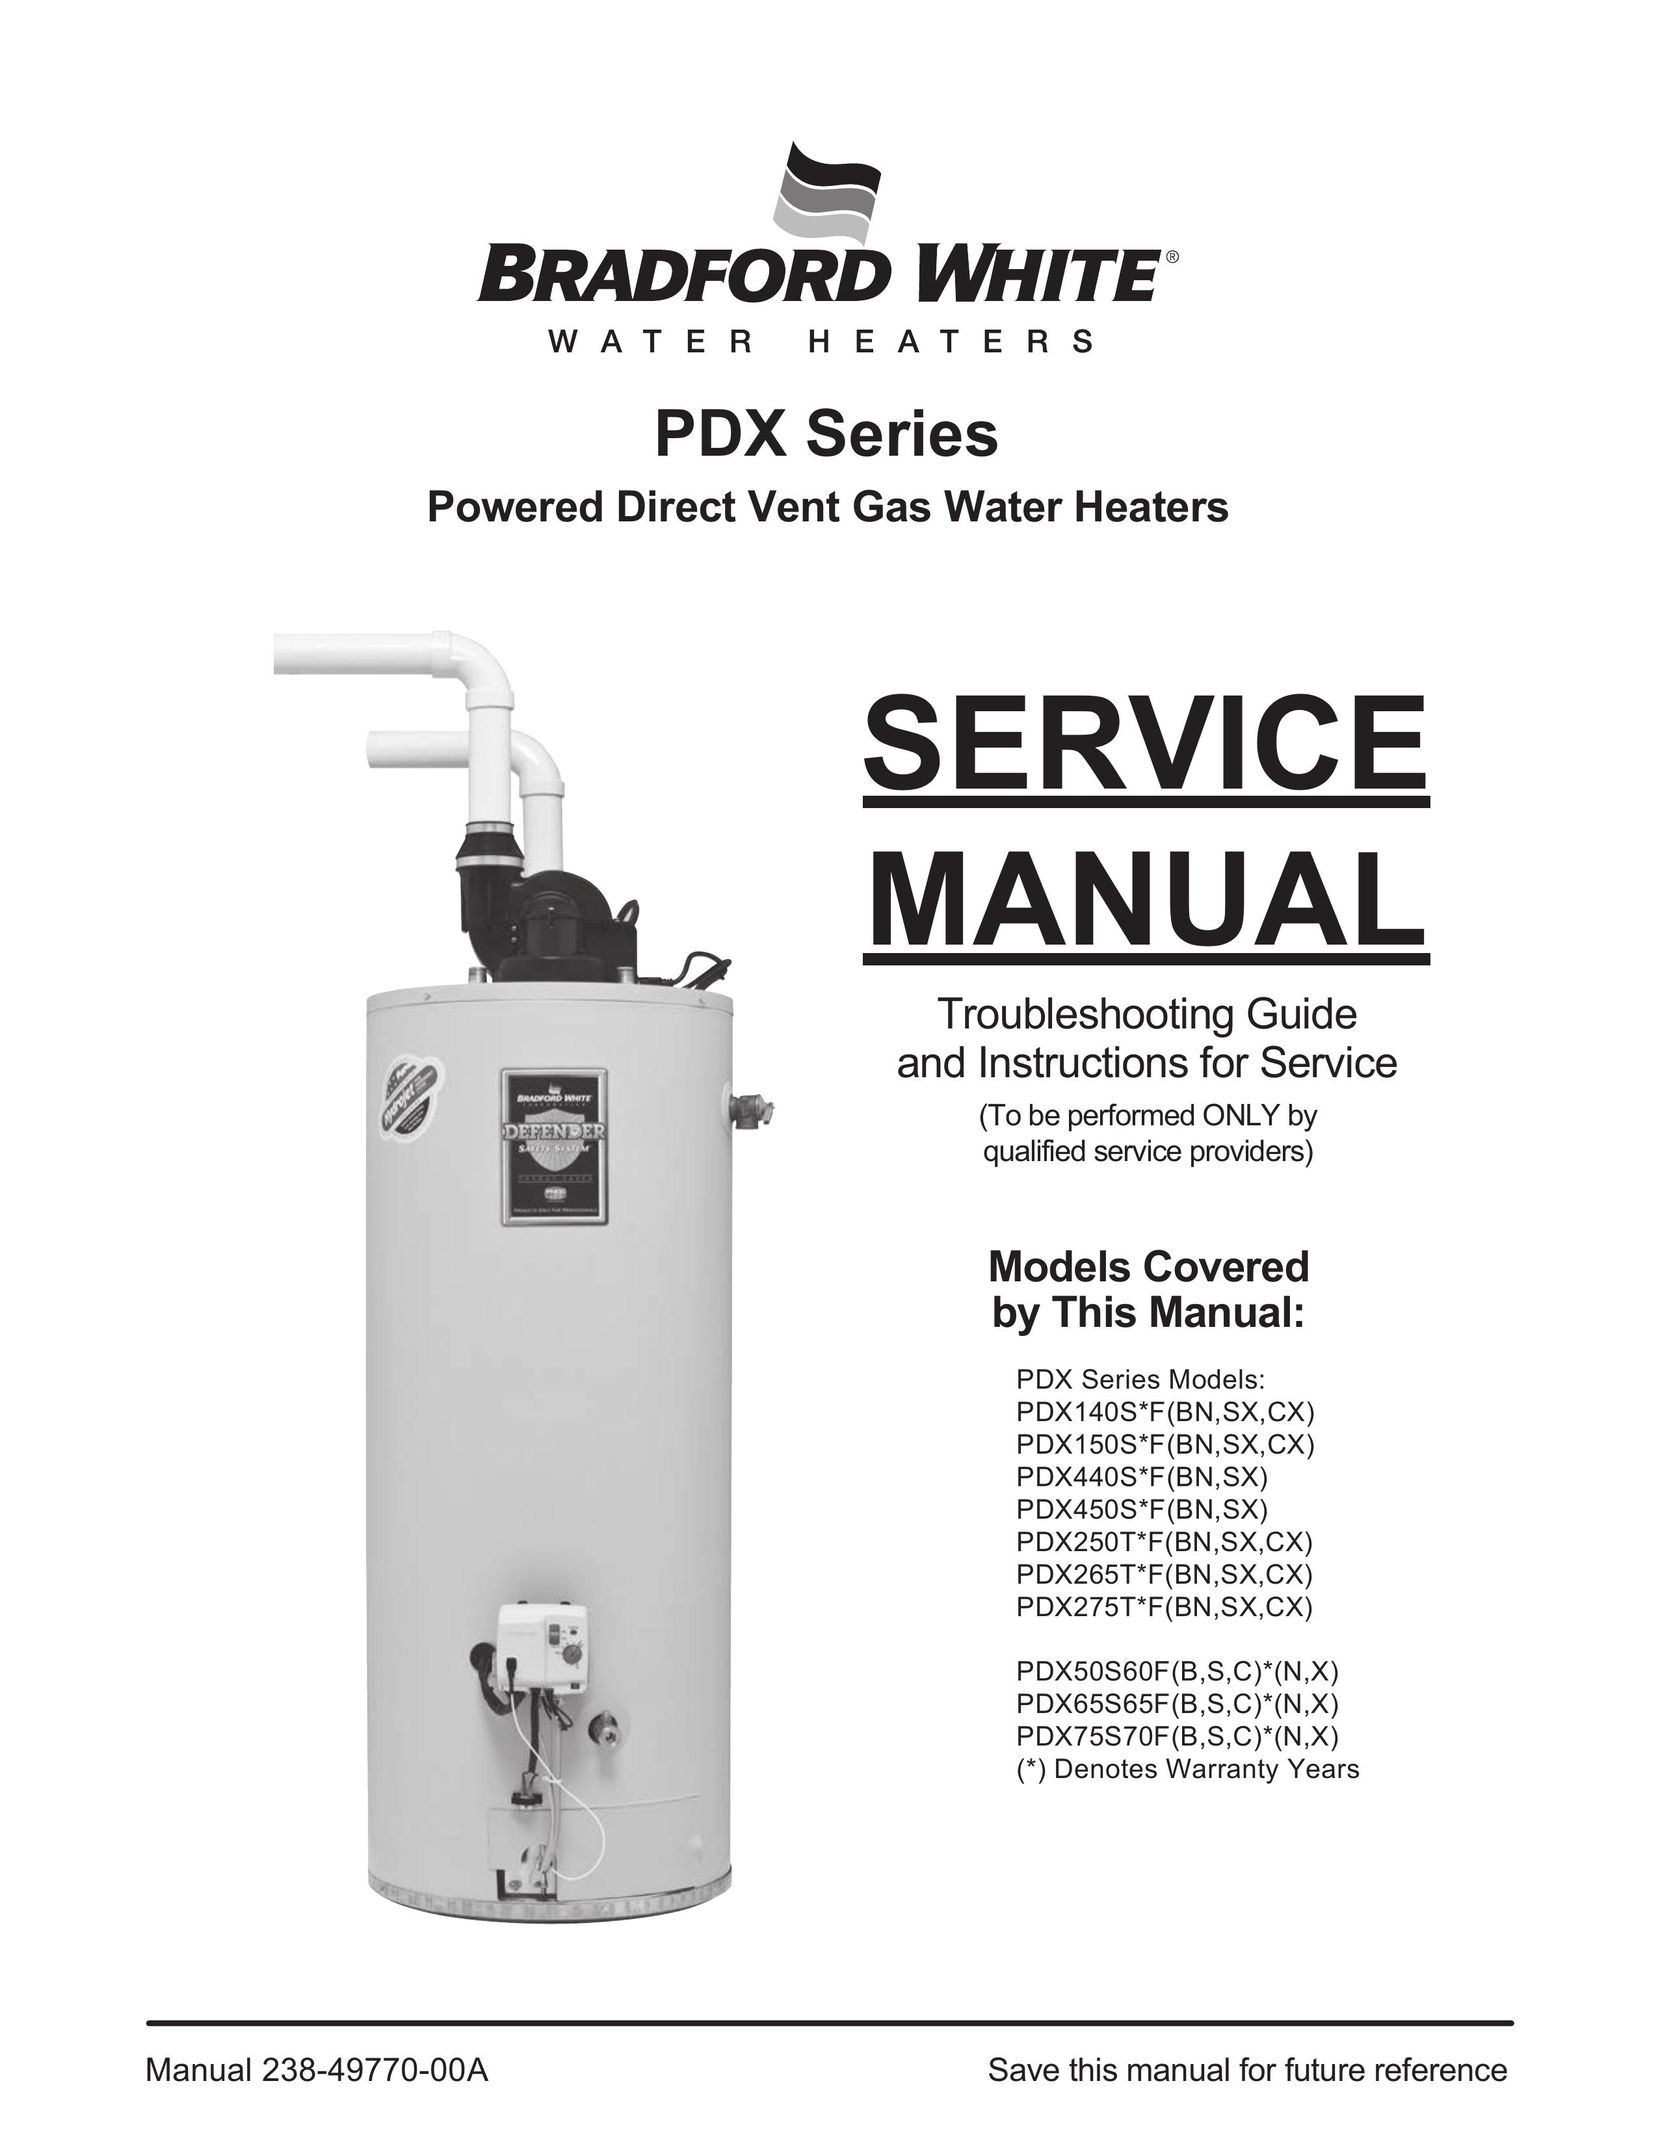 Honeywell PDX140S*F(BN,SX,CX) Water Heater User Manual